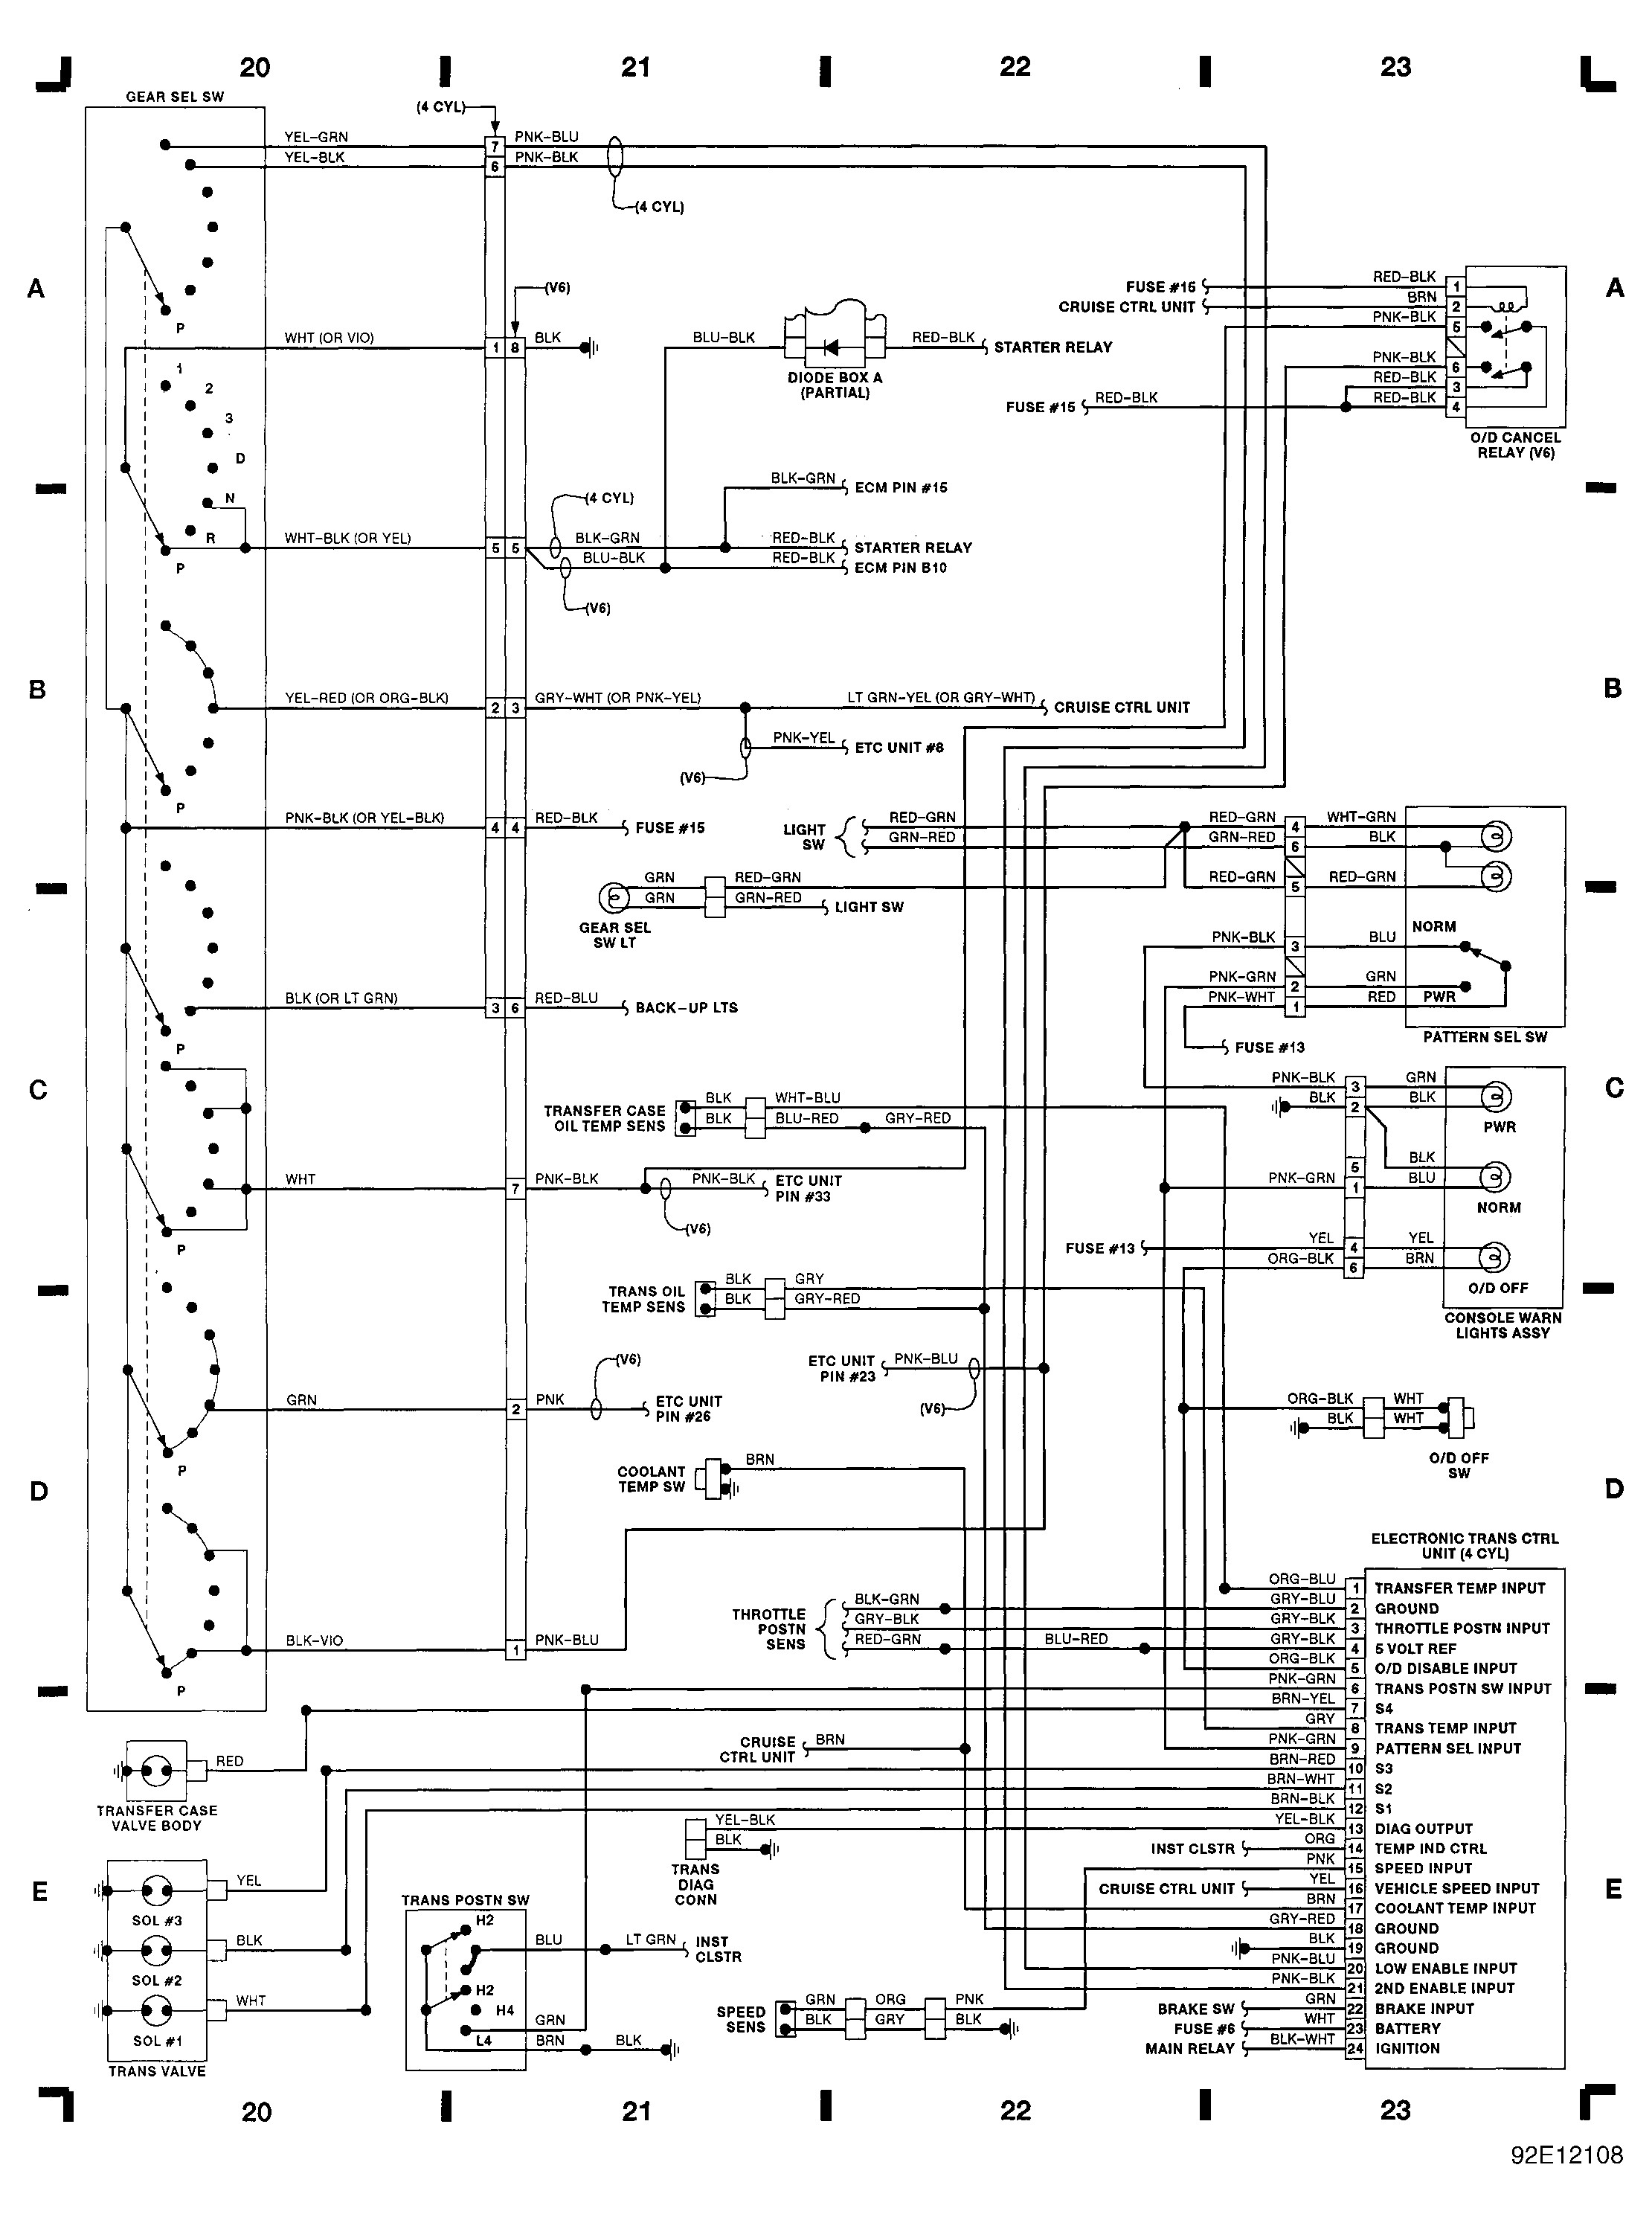 2001 isuzu Rodeo Engine Diagram isuzu Rodeo Wiring Diagram Get Free Image About Wiring Diagram Of 2001 isuzu Rodeo Engine Diagram